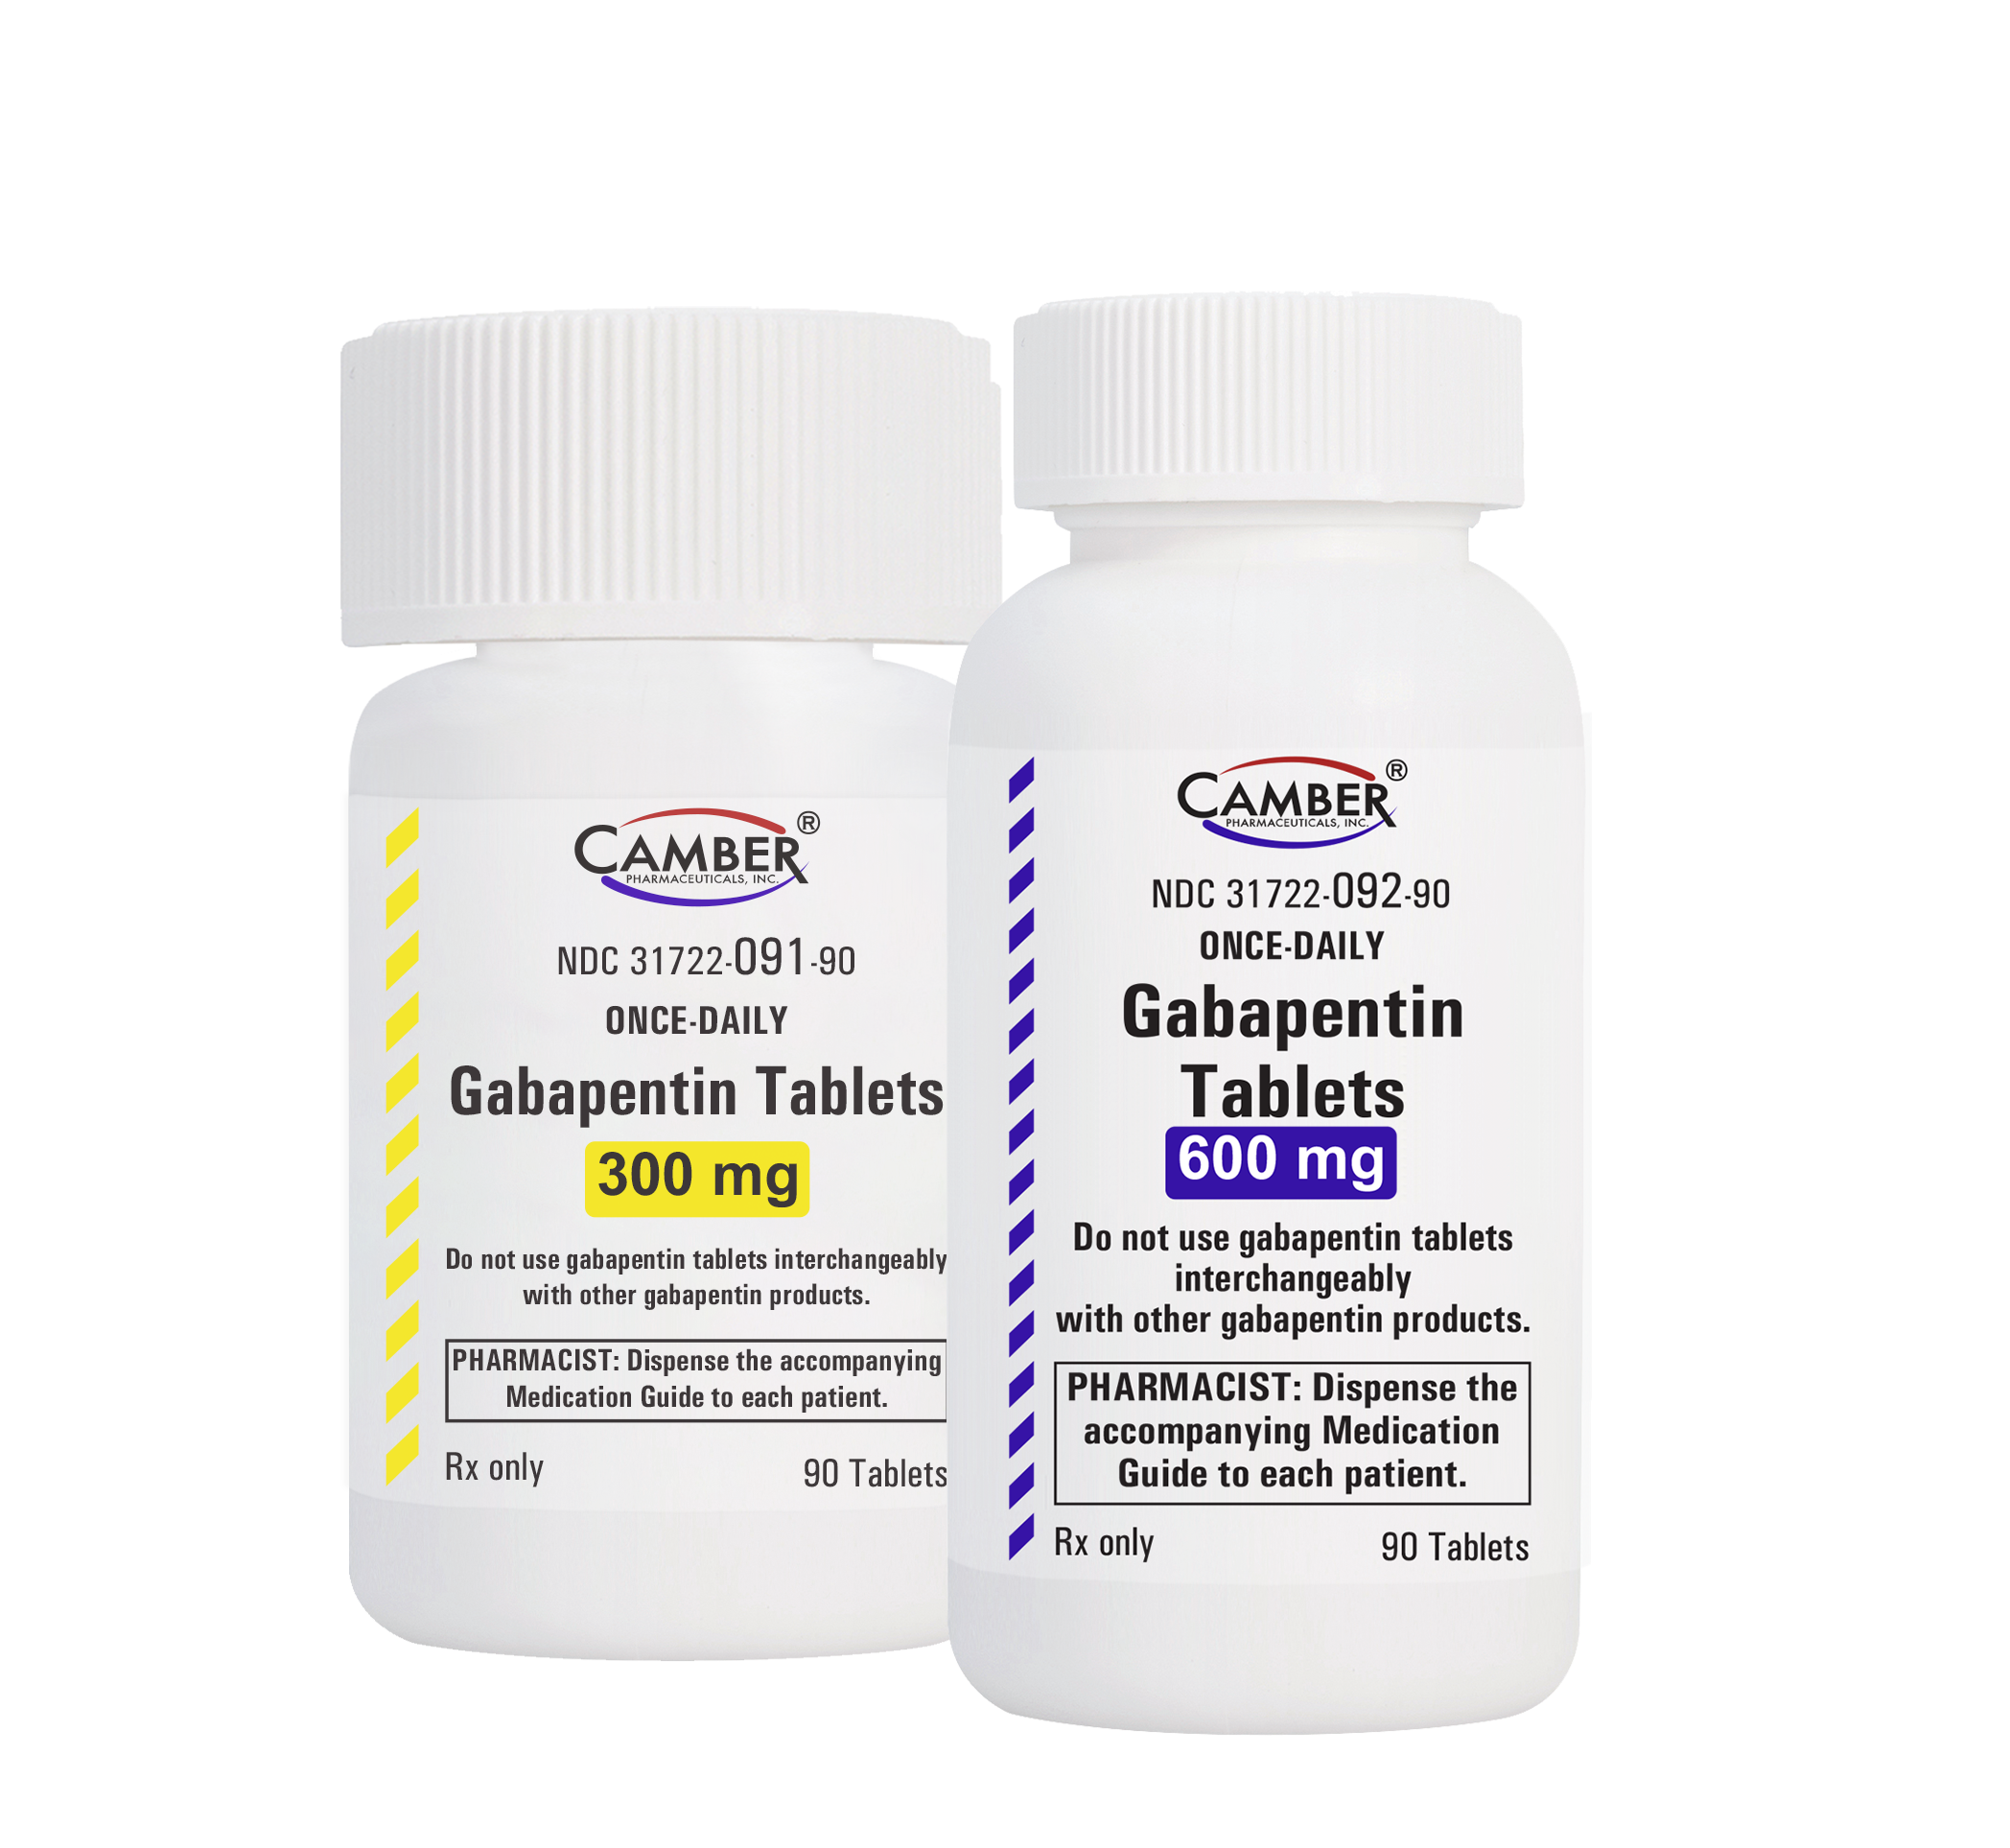 Camber Pharmaceuticals Launches Generic Gralise® 